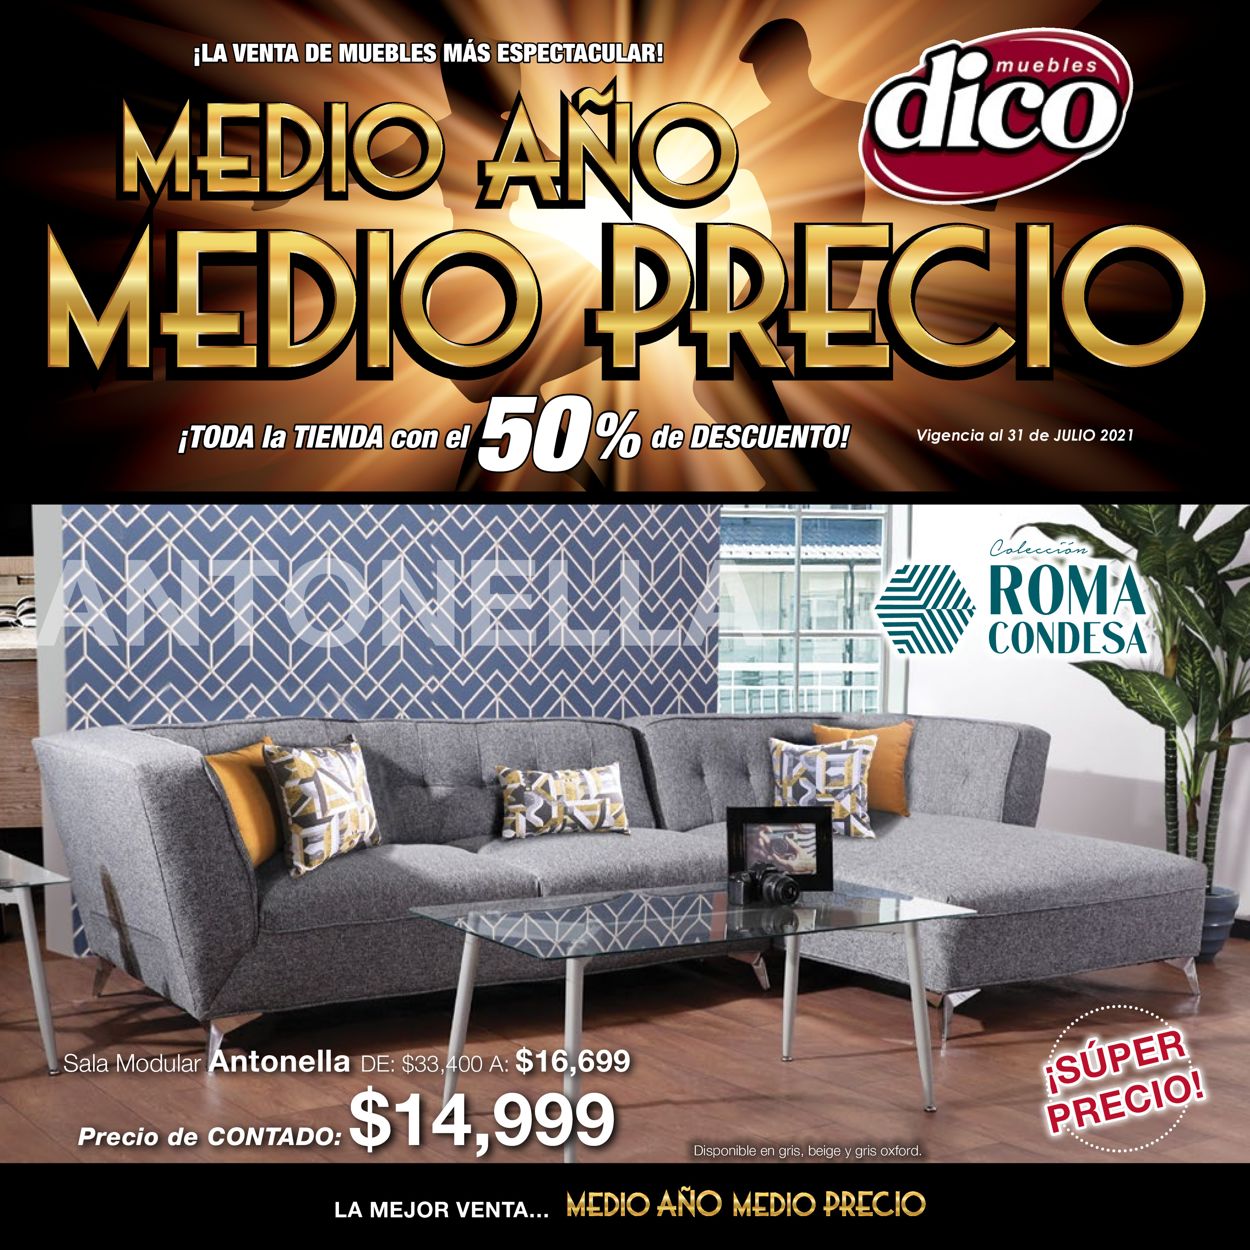 Muebles Dico Folleto - 05.07-31.07.2021